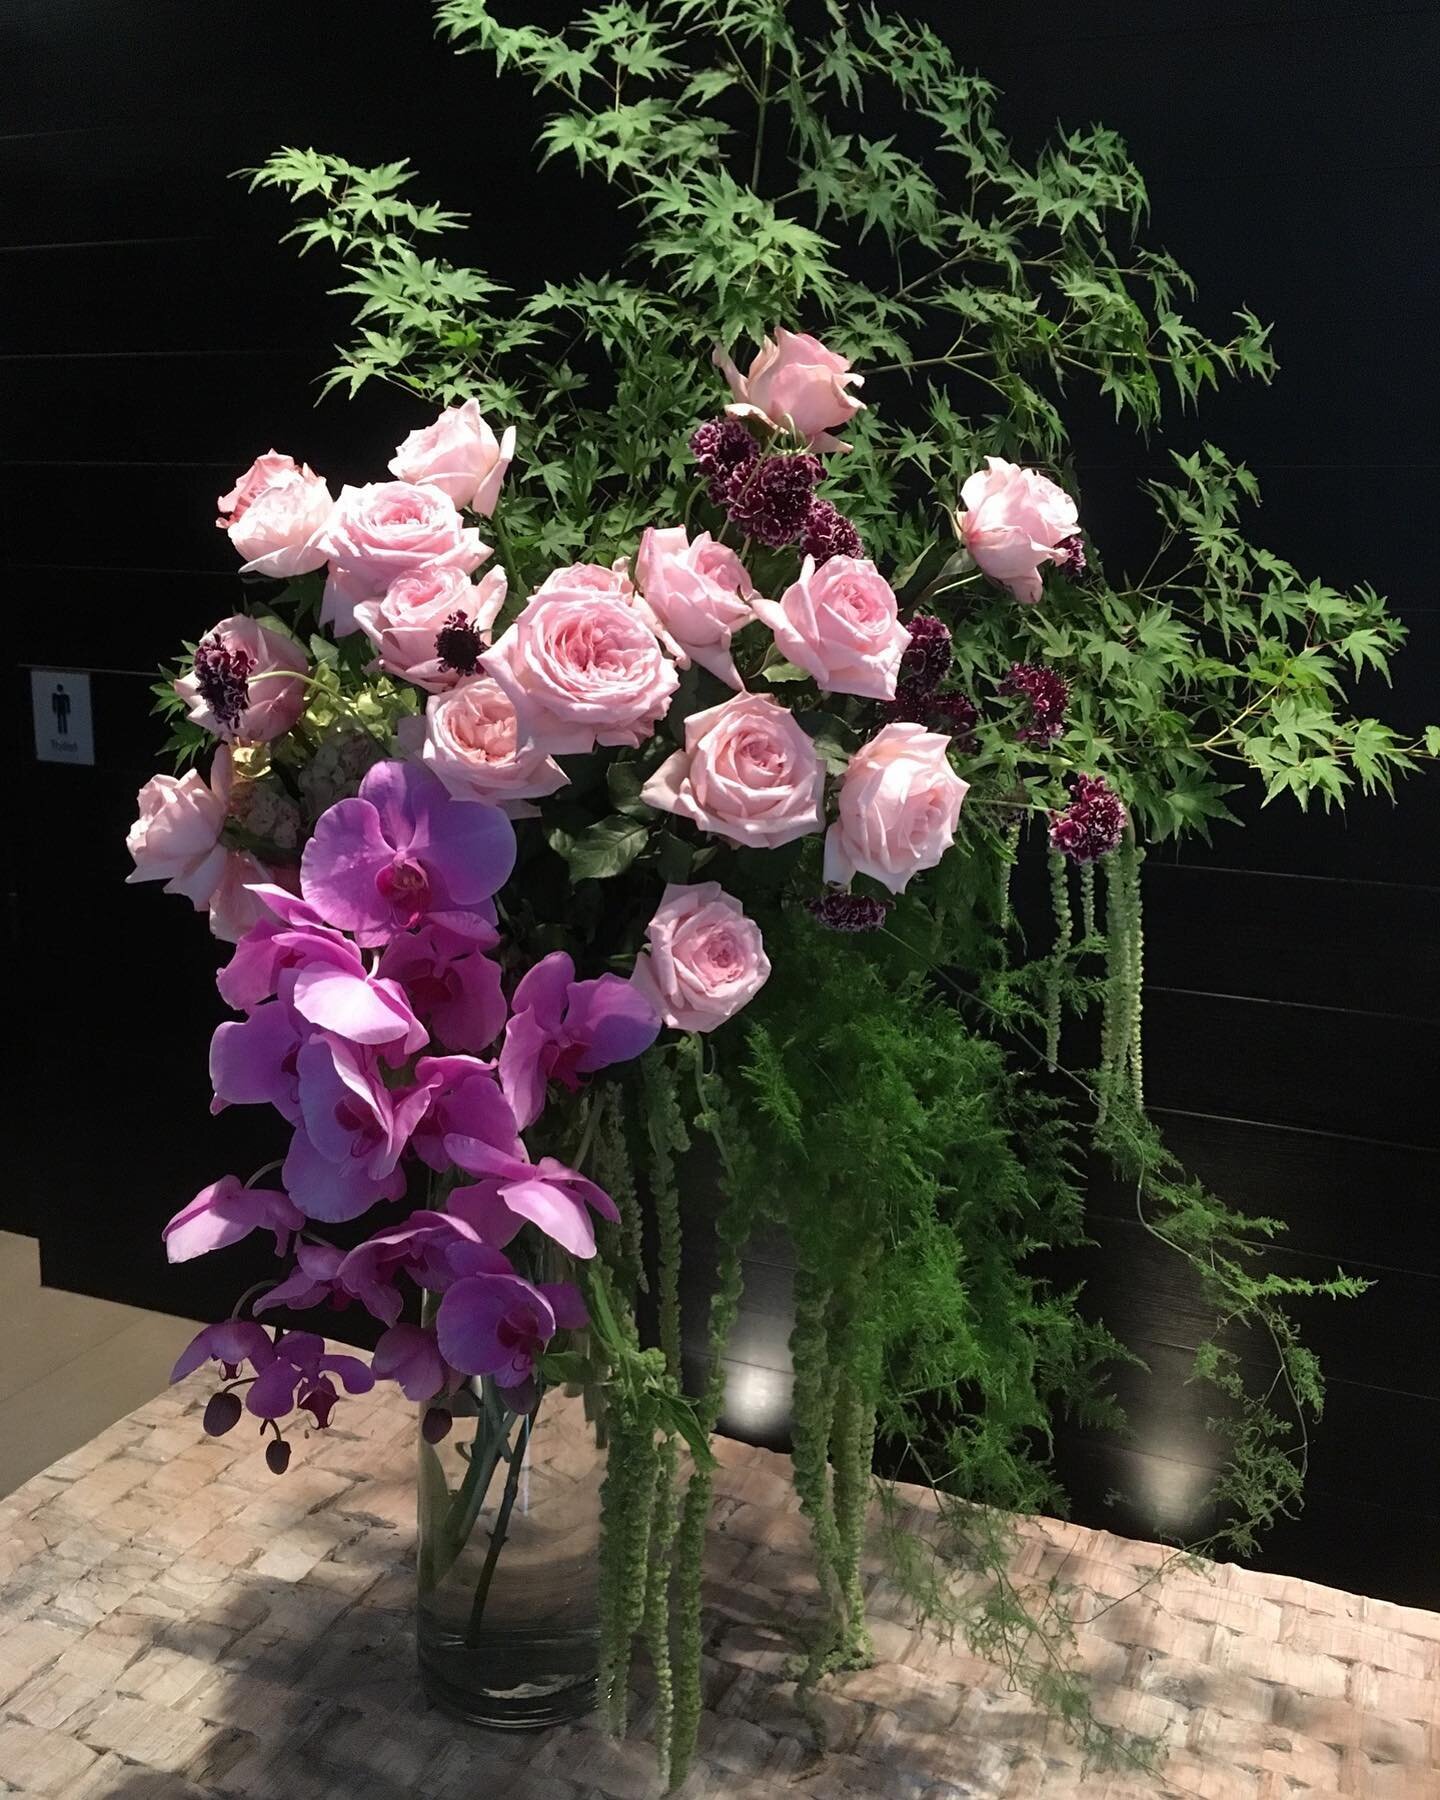 It&rsquo;s how you catch the LIGHT 😉 
.
#amylouroses #phalaenopsisorchid #japanesemaple #luxuryflorist #toorakroad #southyarra #makeastatement #floraldesign